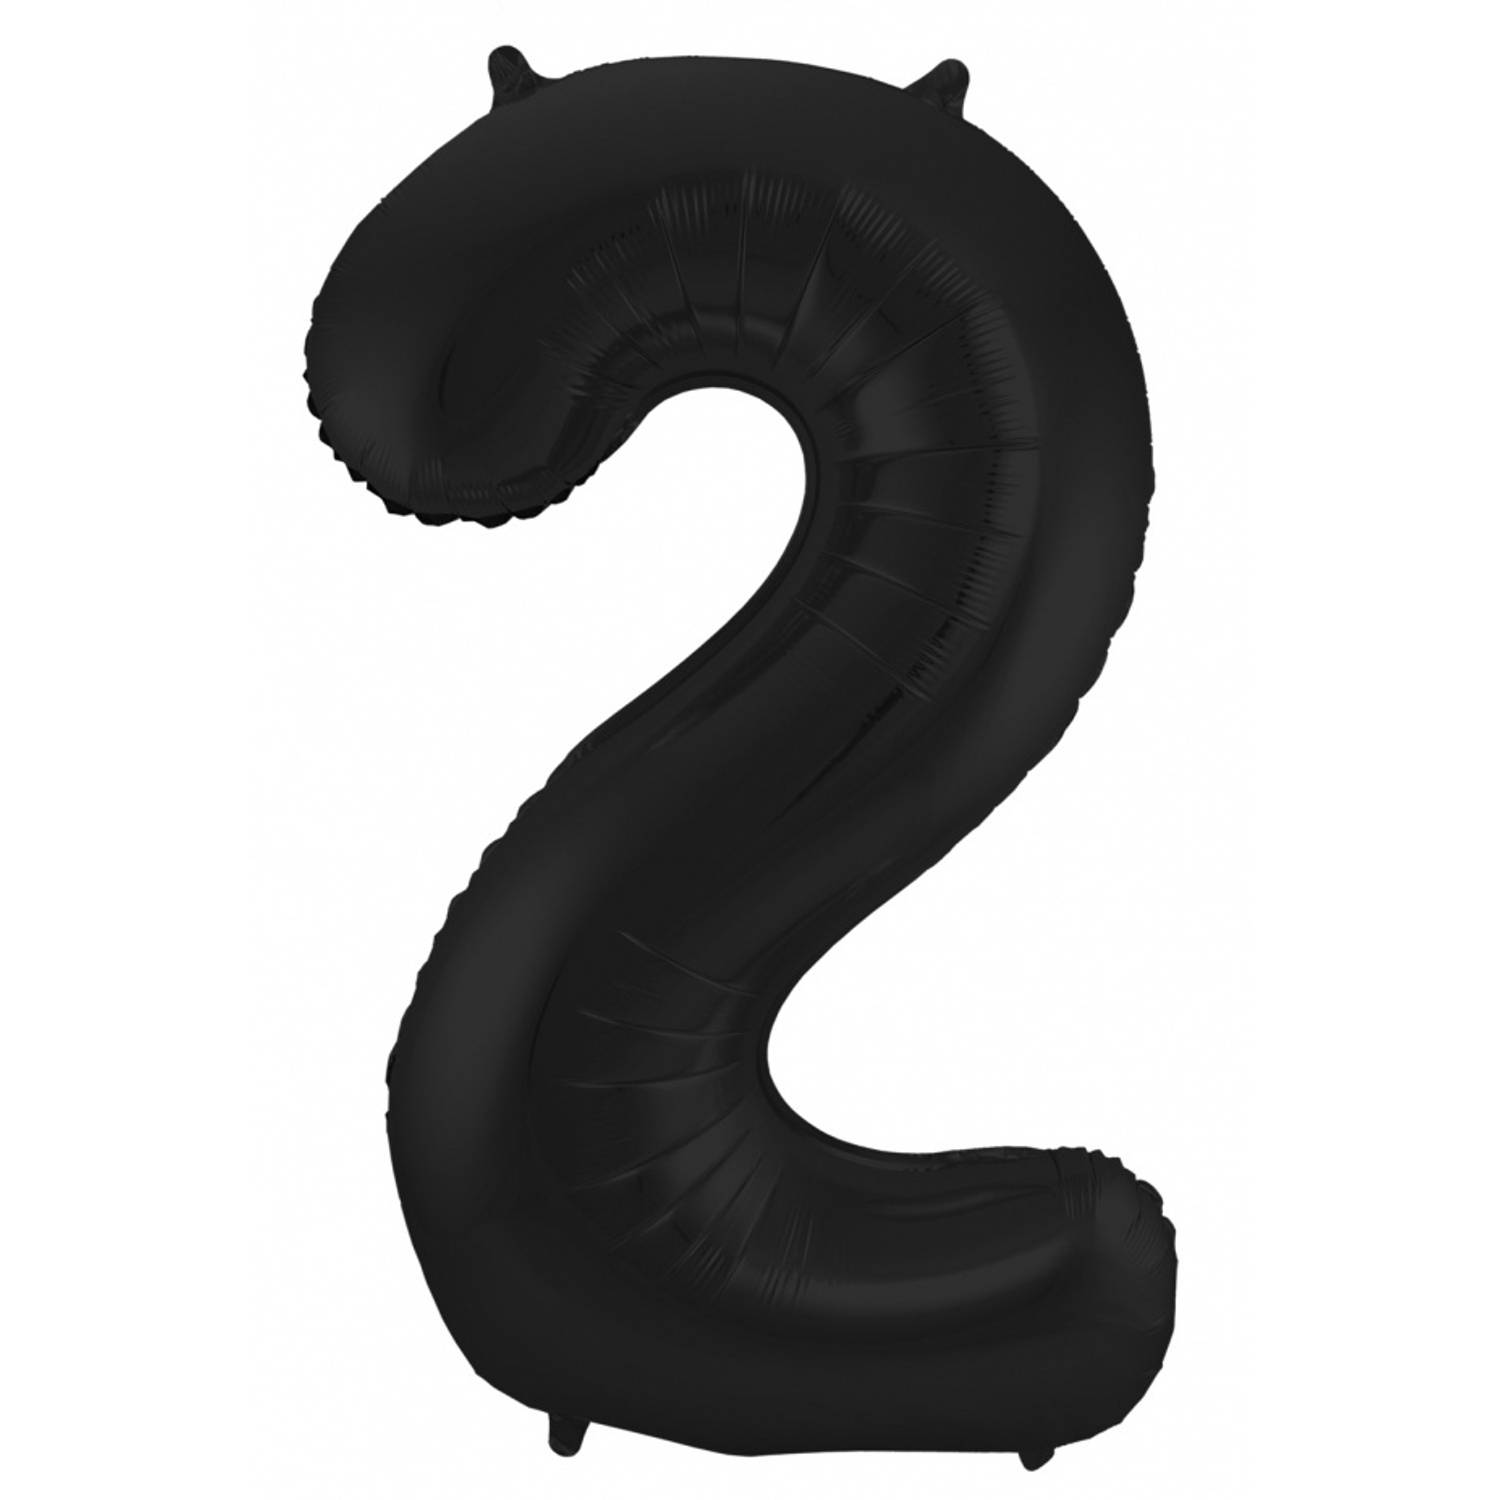 Folat Folie cijfer ballon - 86 cm zwart - cijfer 2 - verjaardag leeftijd